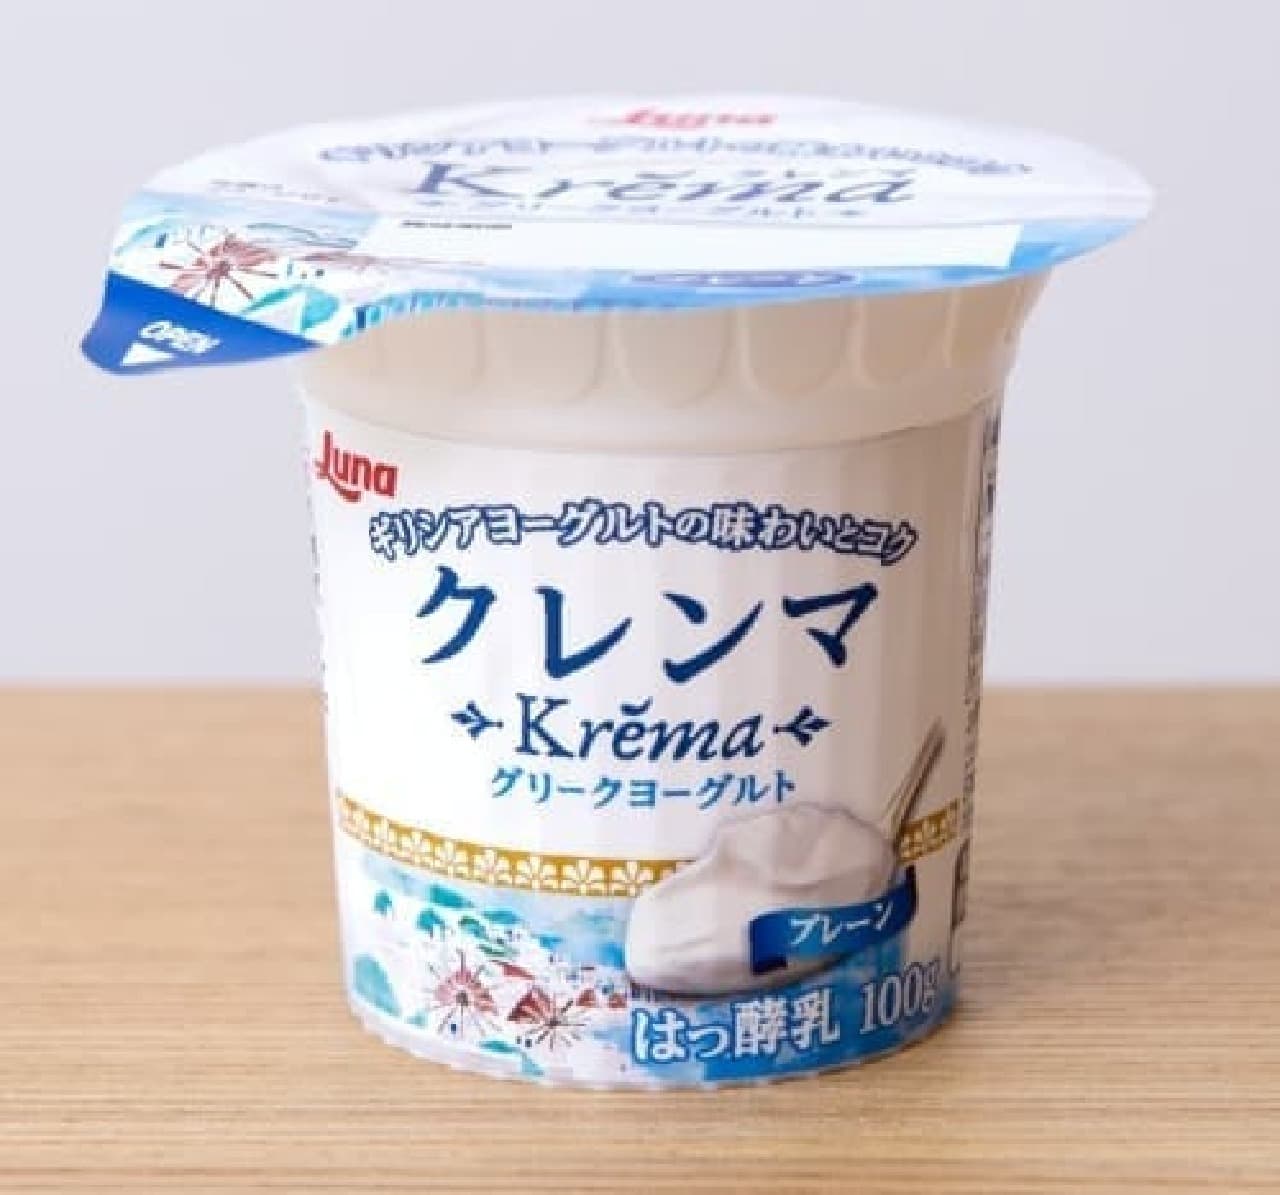 Japanese Luna "Greek Yogurt Clemma" Plain